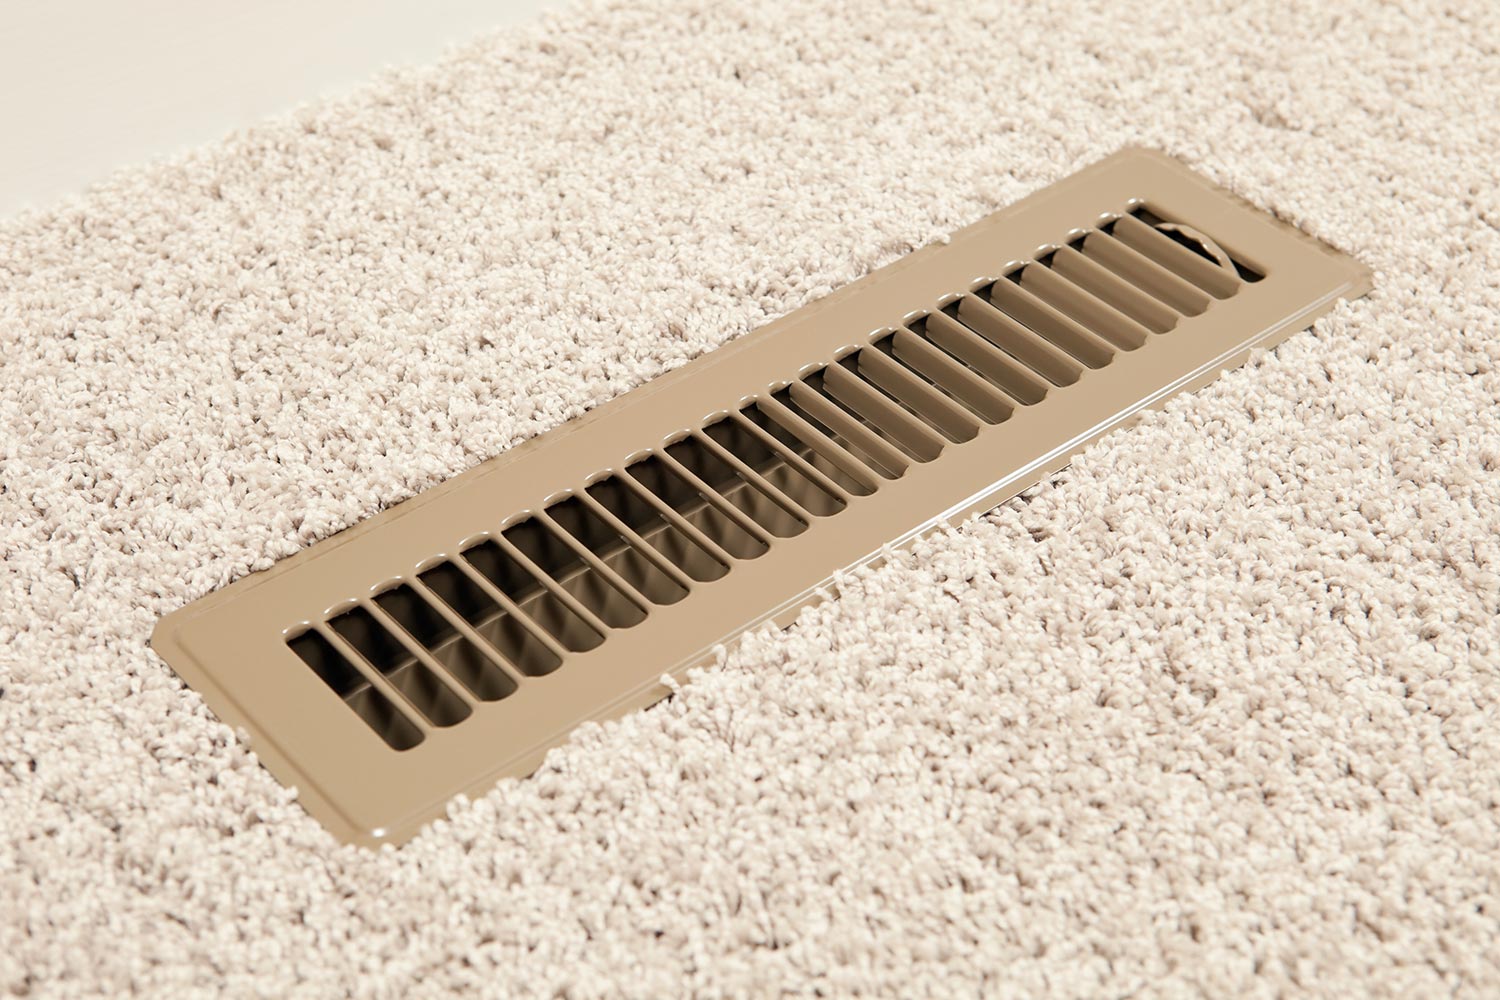 A new metal household adjustable HVAC vent register on a carpeted floor